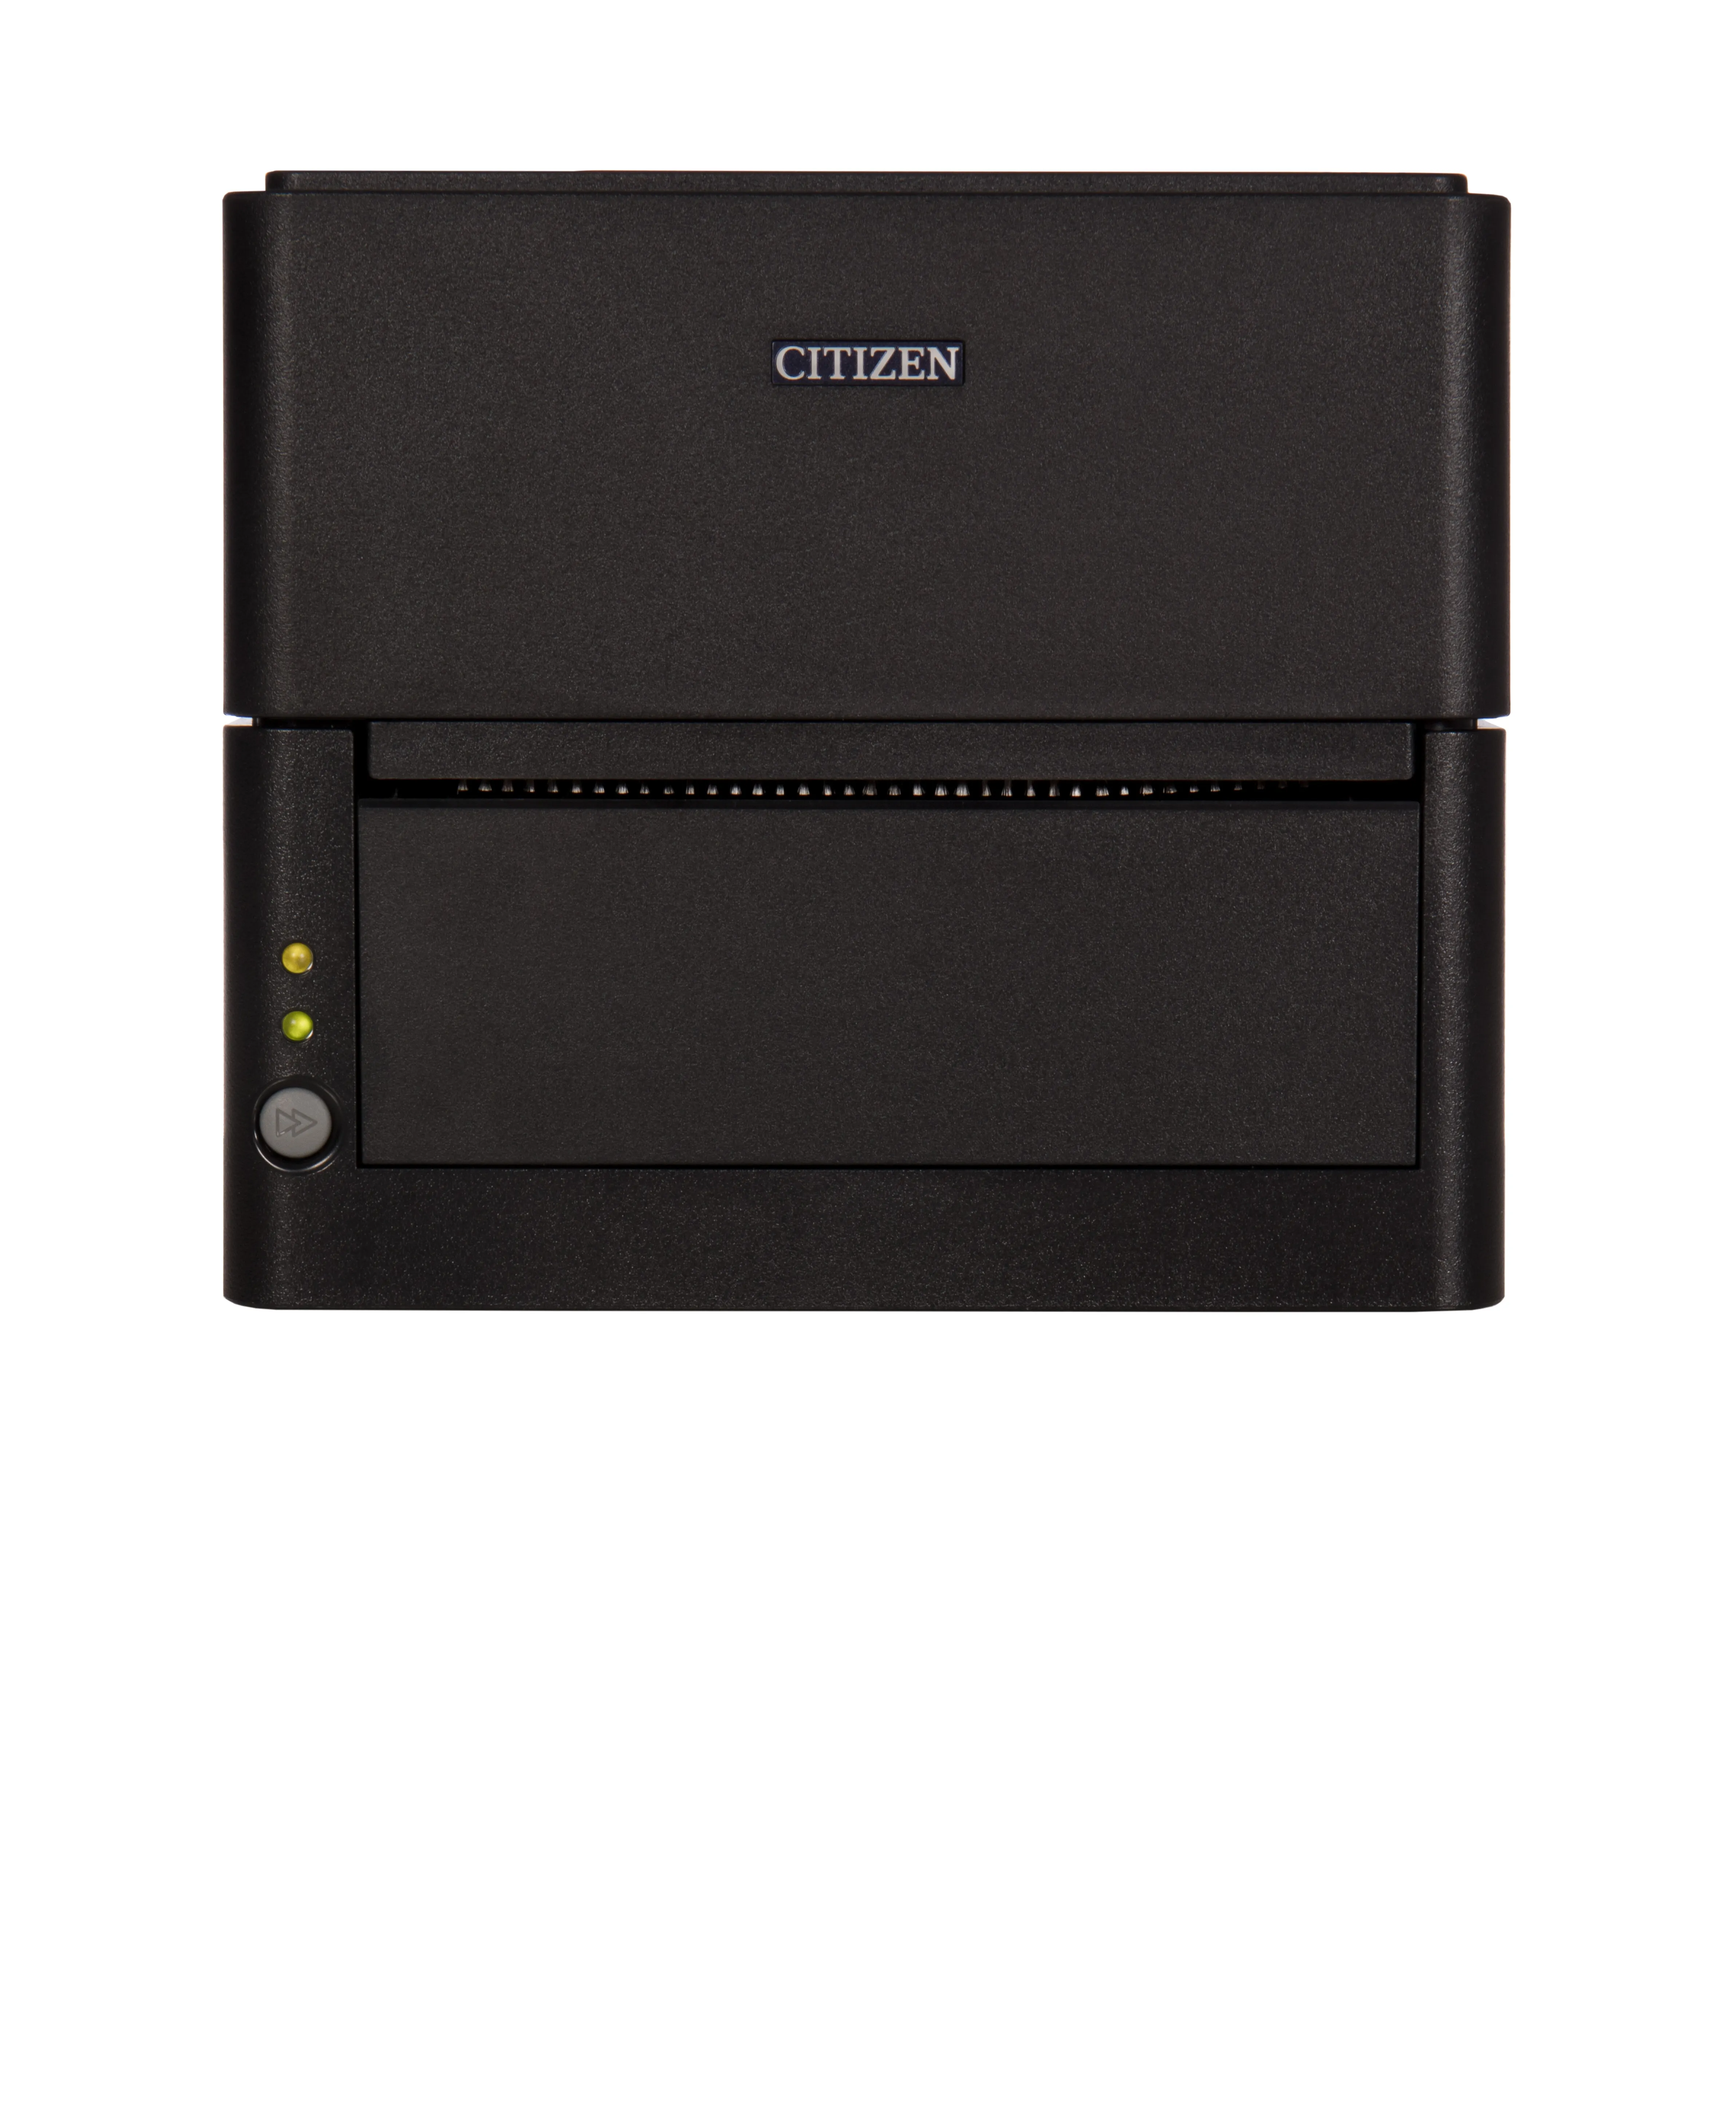 Етикетен принтер, Citizen Label Desktop printer CL-E300 Direct thermal Print Speed 200mm/s, Print Width(max.) 4"(104 mm)/ Media Width (min-max) 1"- 5"(25.4-118.1 mm)/ Roll Size(max) 5"(125 mm), Core Size 1" (25mm), Resol.203dpi/ Interface USB/RS-232/LAN EN Plug(EU) Black - image 3